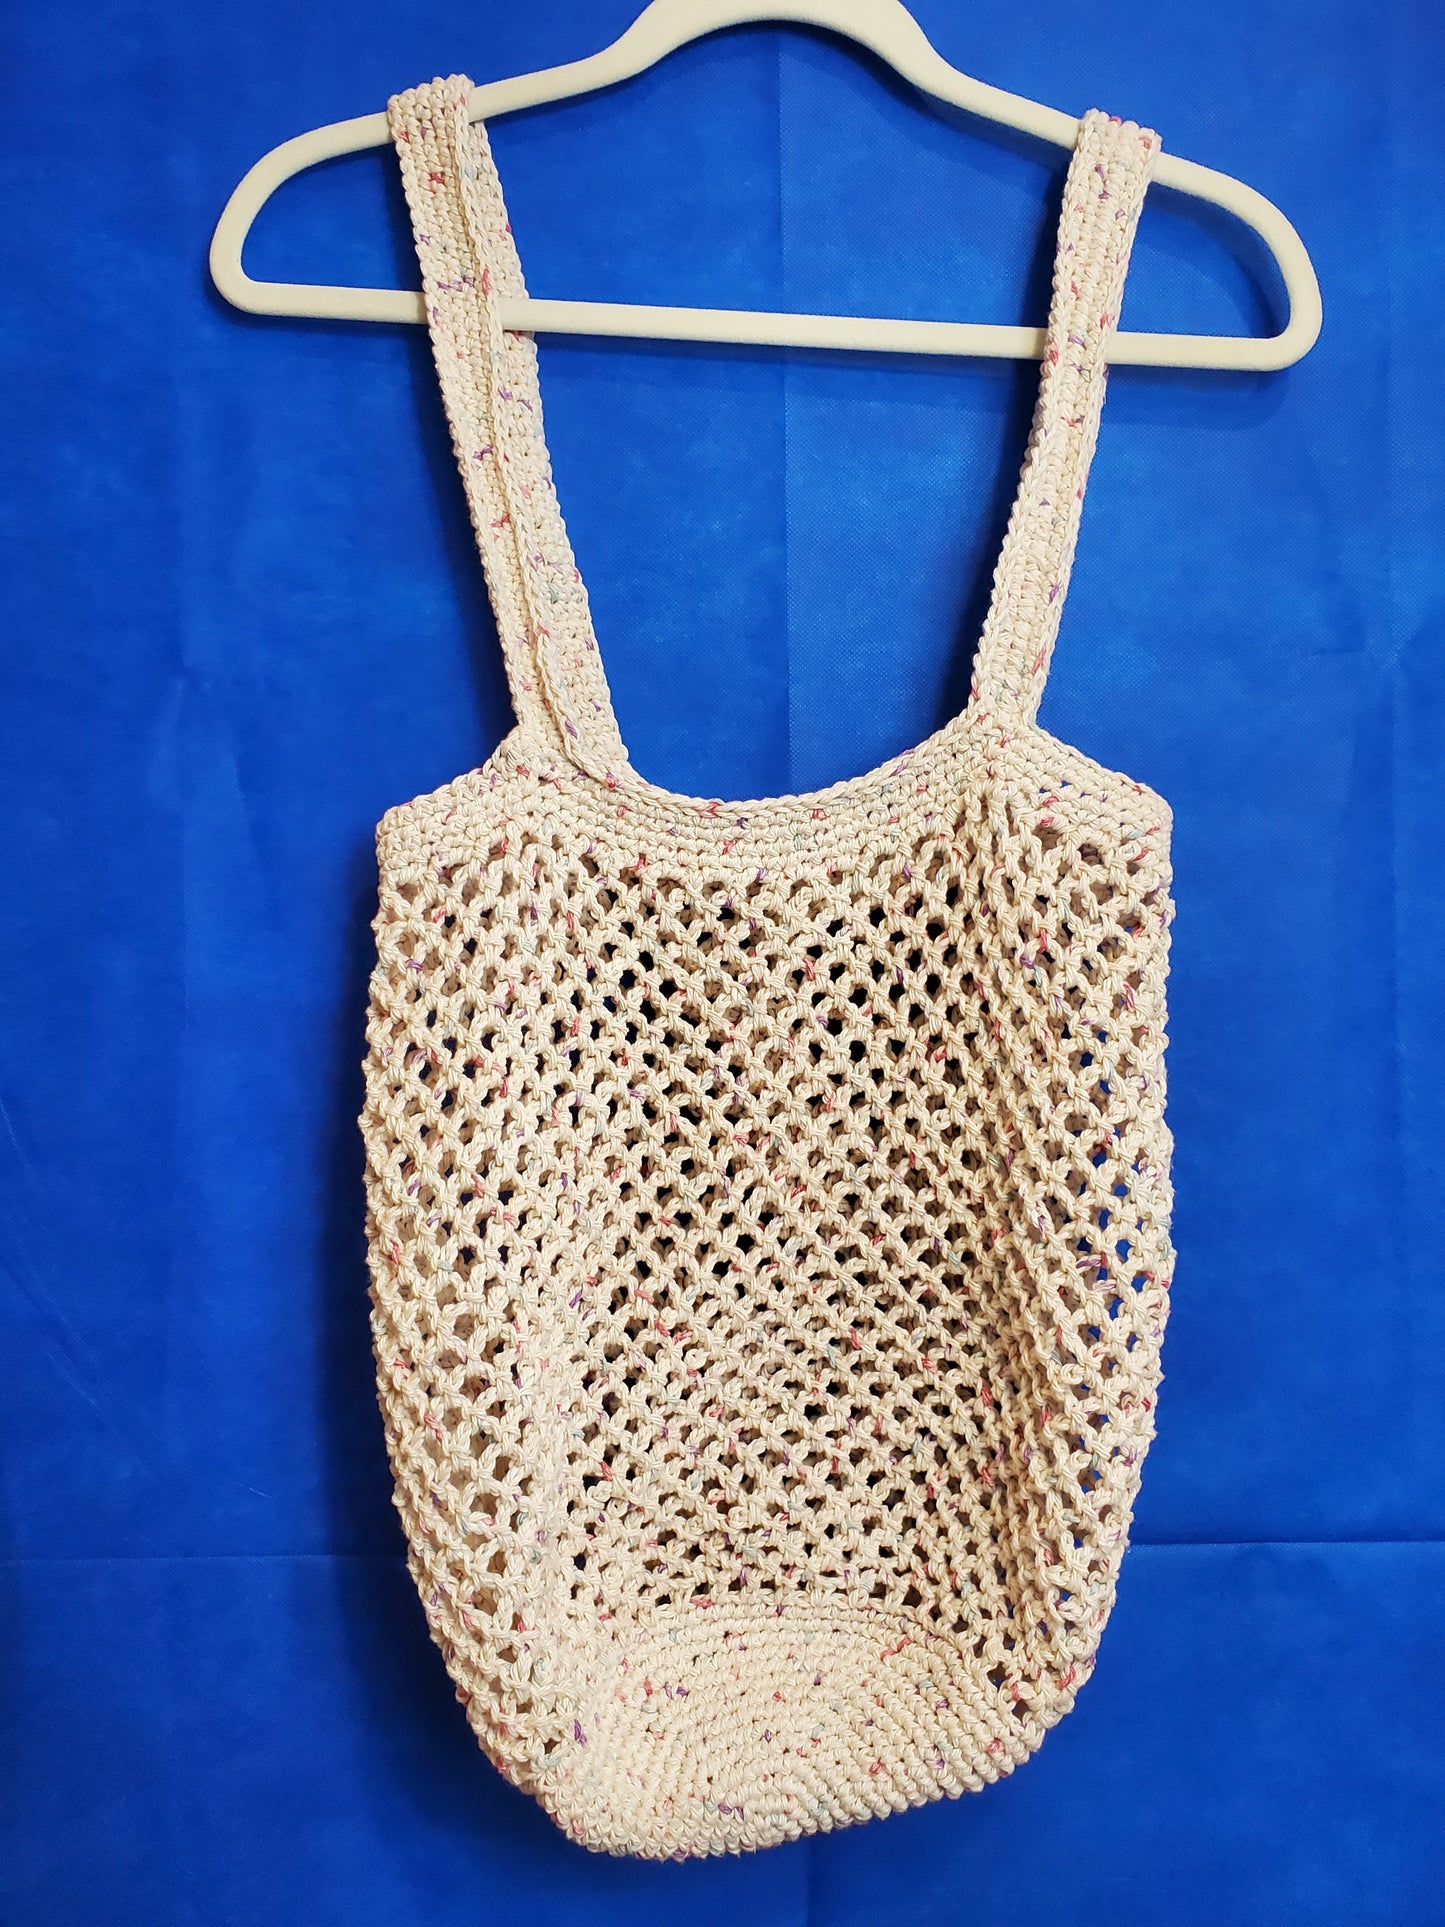 Market Bag / Crocheted Bag / Off white with color flecks